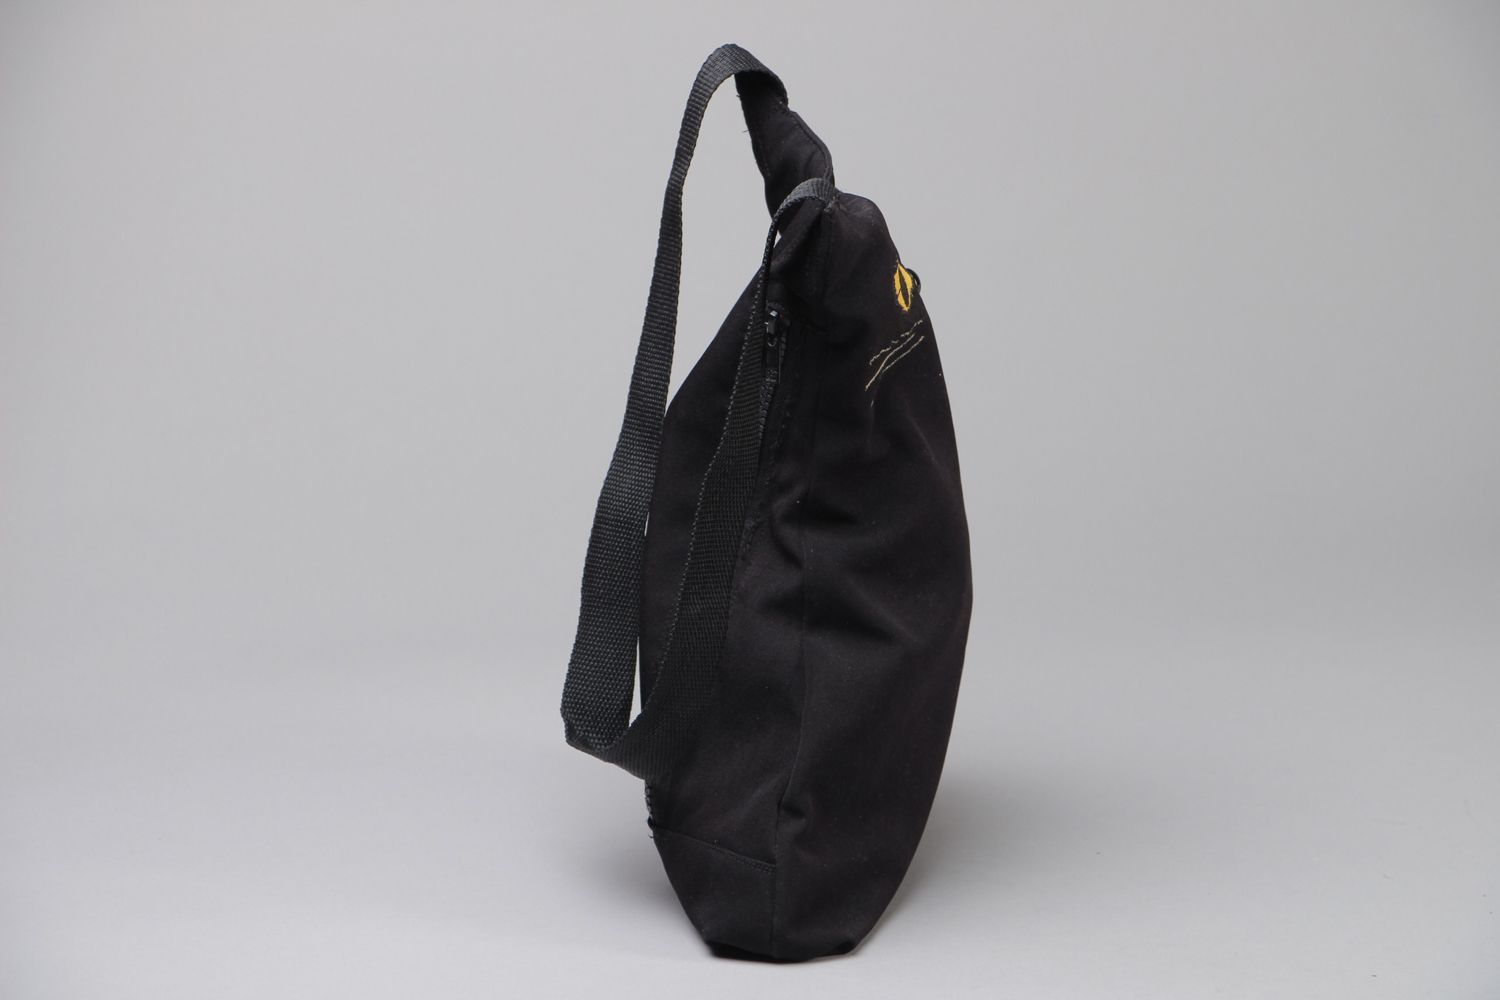 Handmade fabric bag in the shape of black cat photo 2